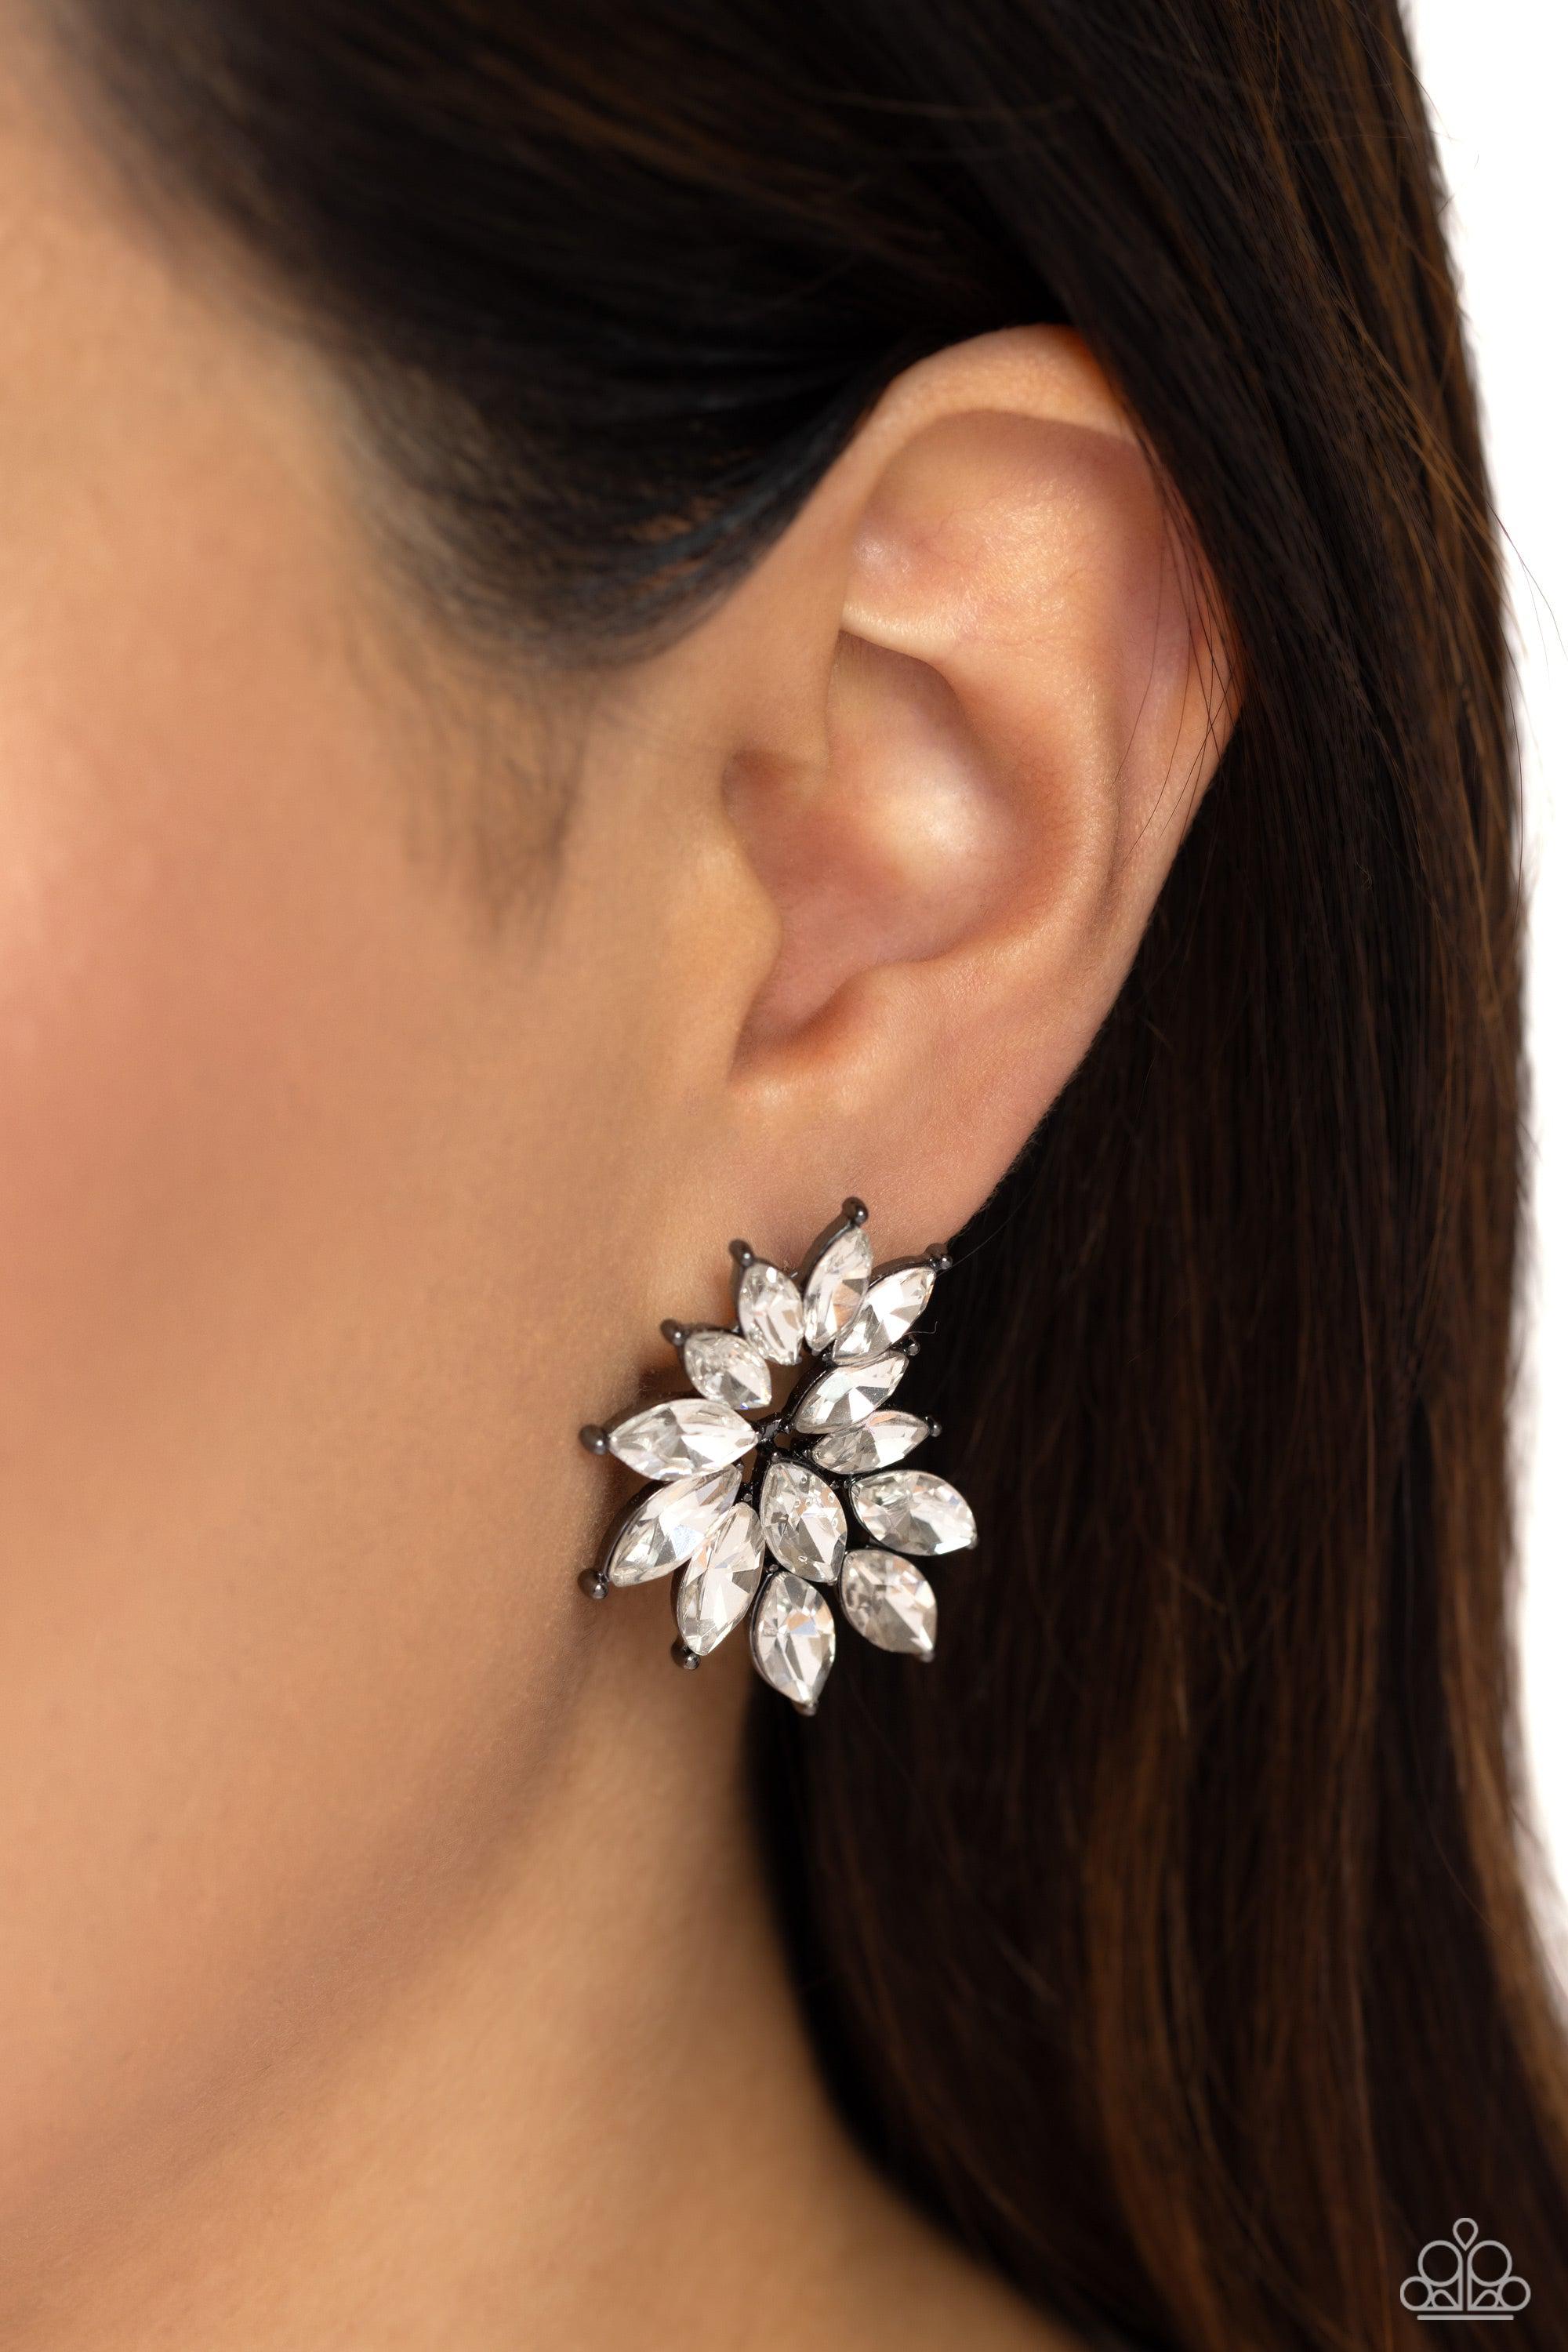 Fire Hazard Gunmetal Black & White Rhinestone Earrings - Paparazzi Accessories- lightbox - CarasShop.com - $5 Jewelry by Cara Jewels